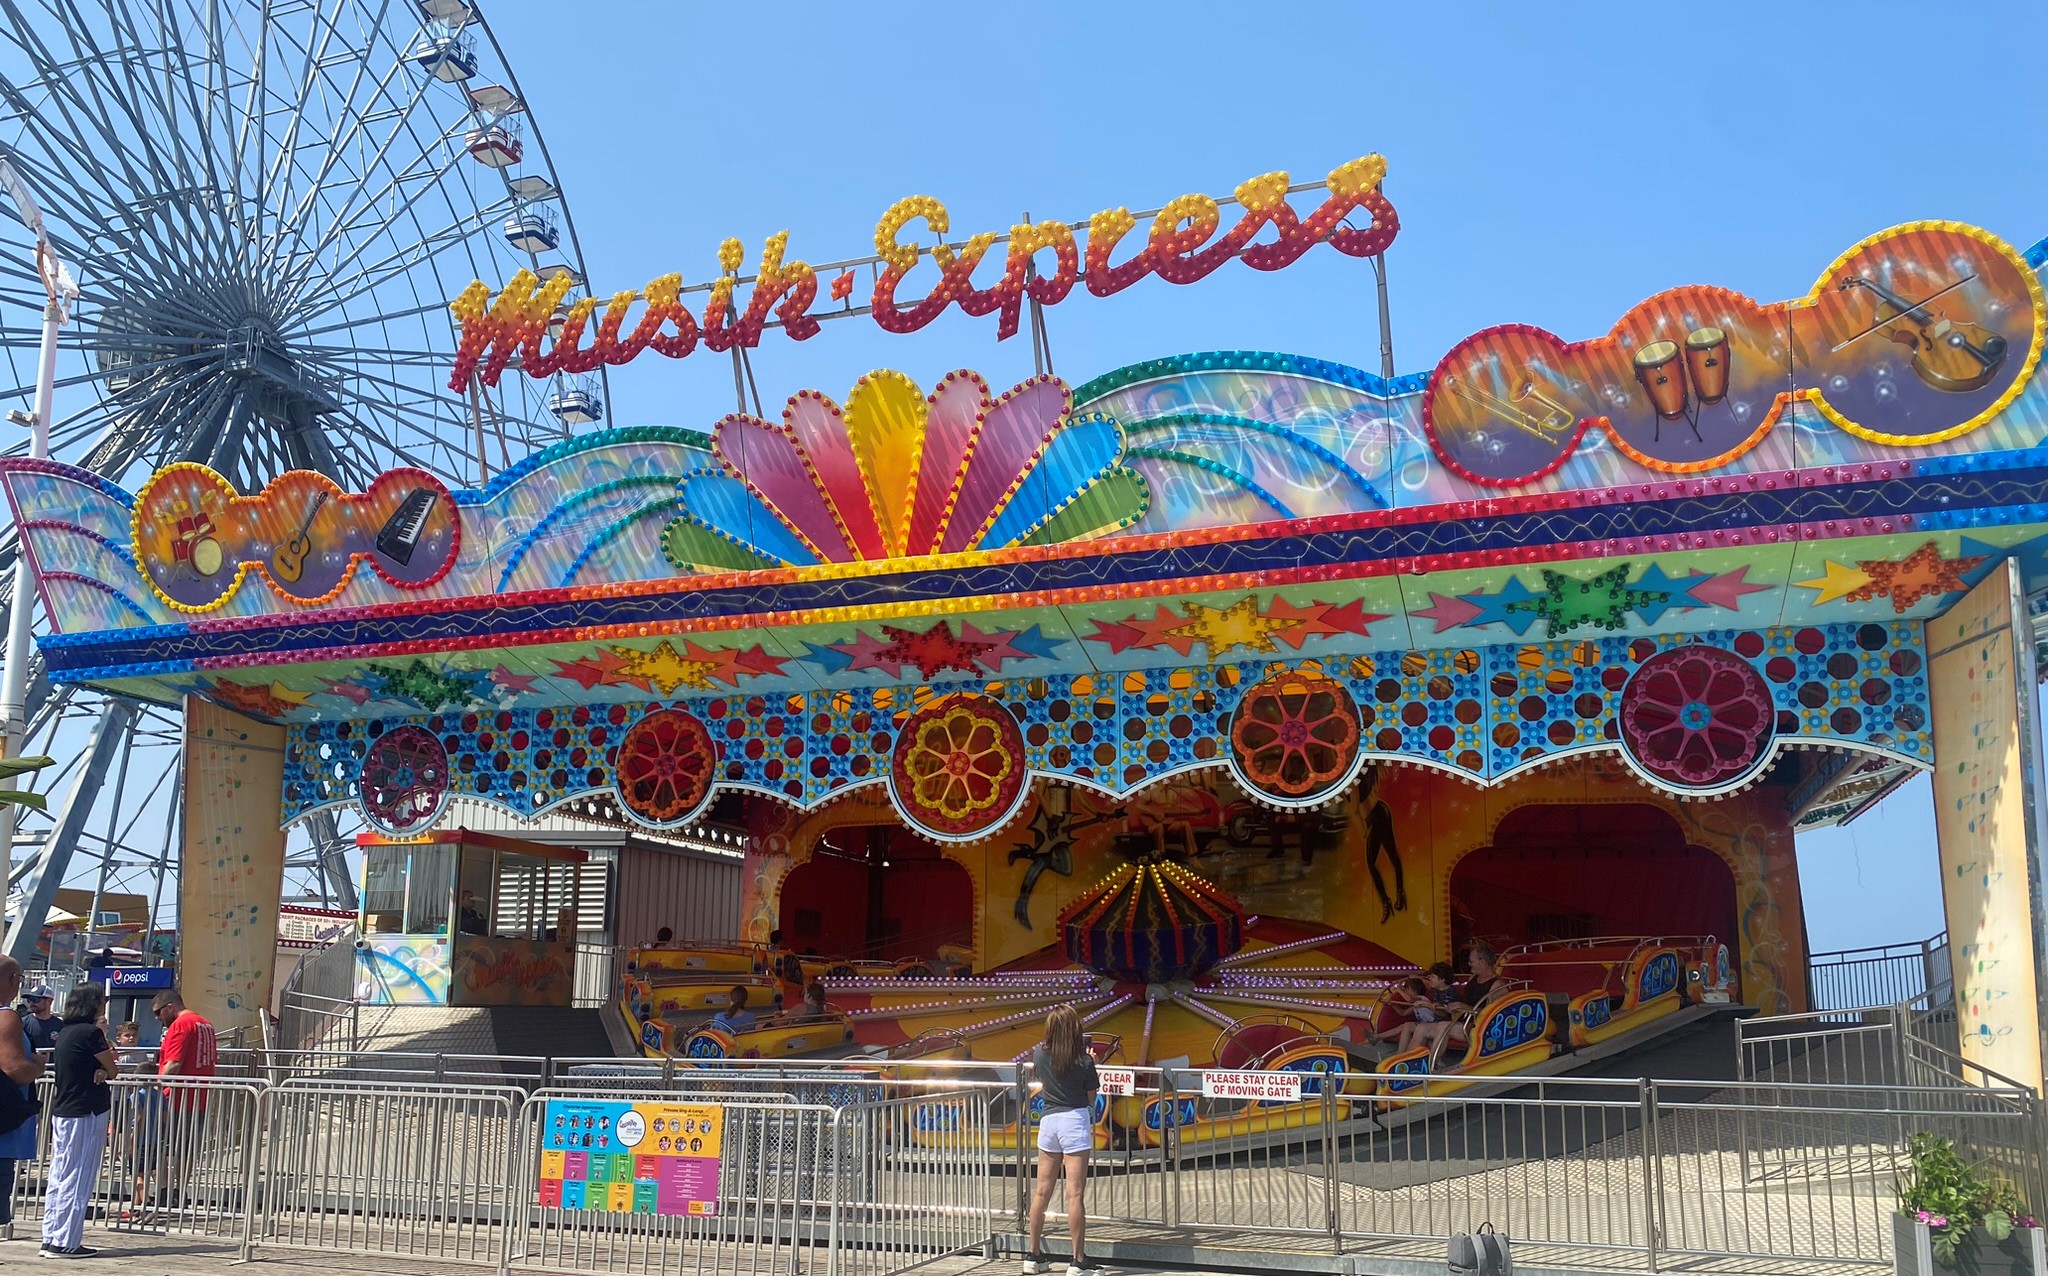 musik express  at Casino Pier amusement park in Seaside Heights NJ